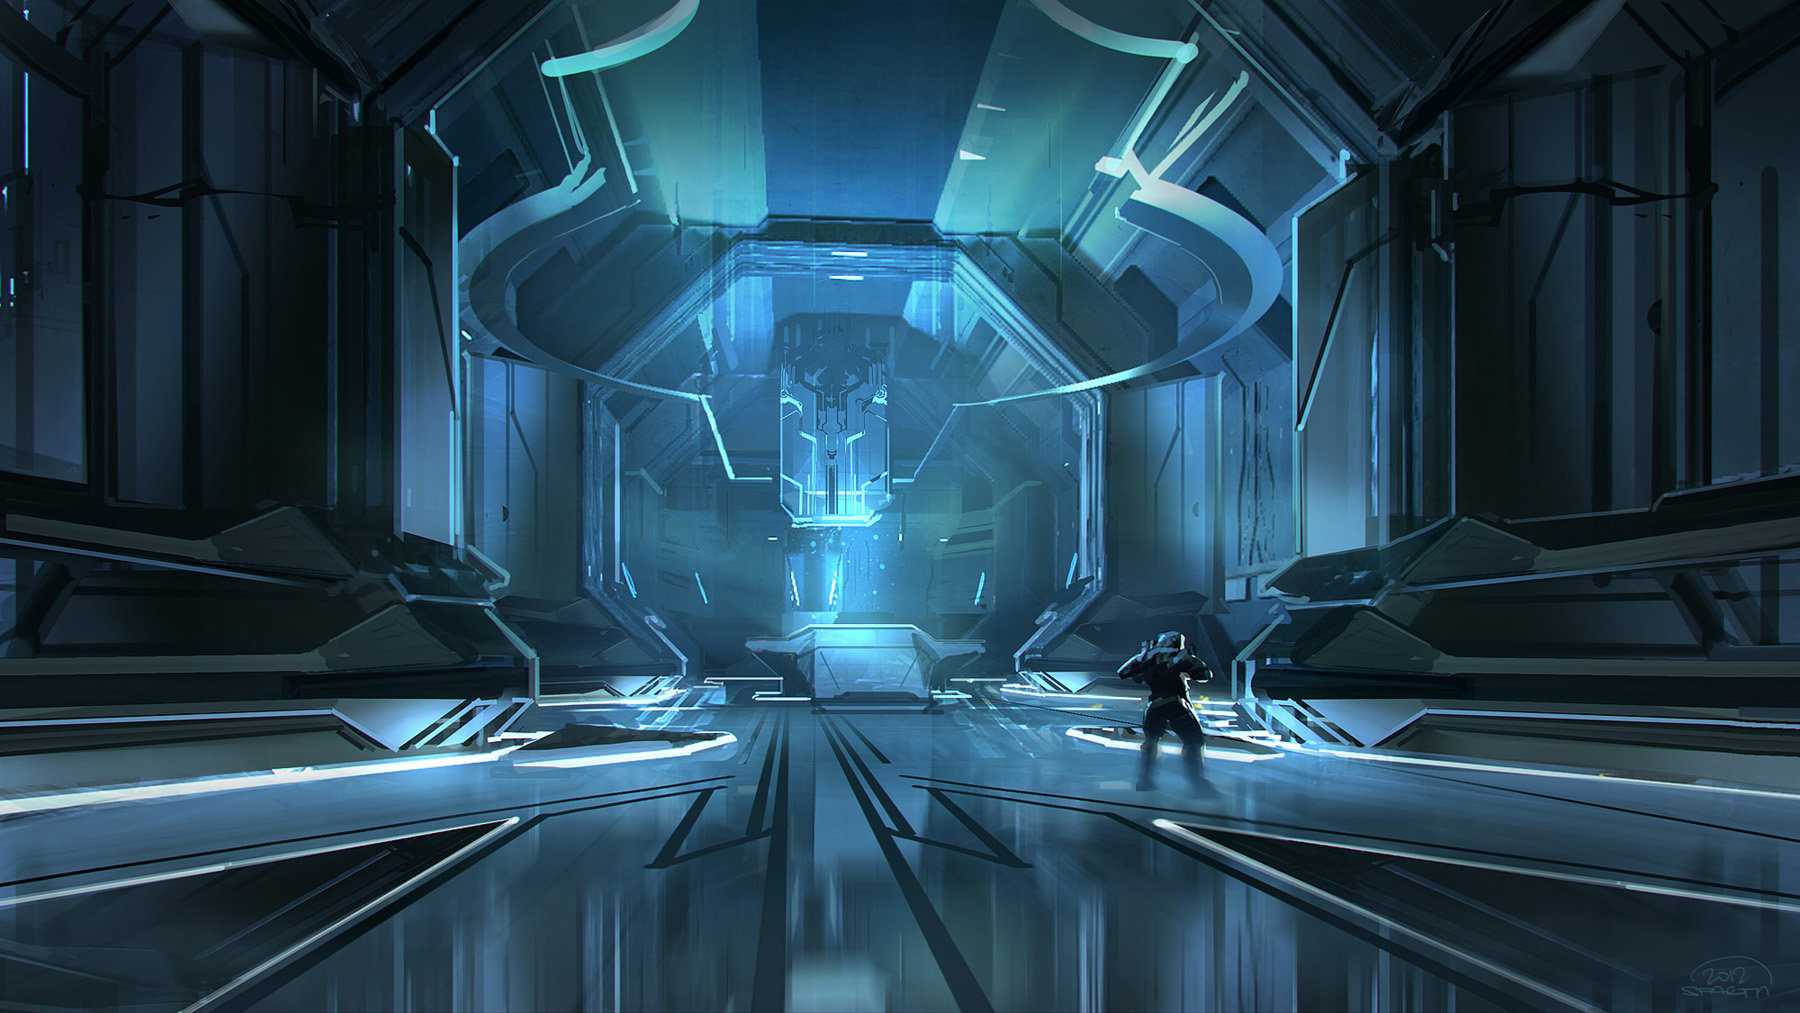 Halo 4 concept art 2012.